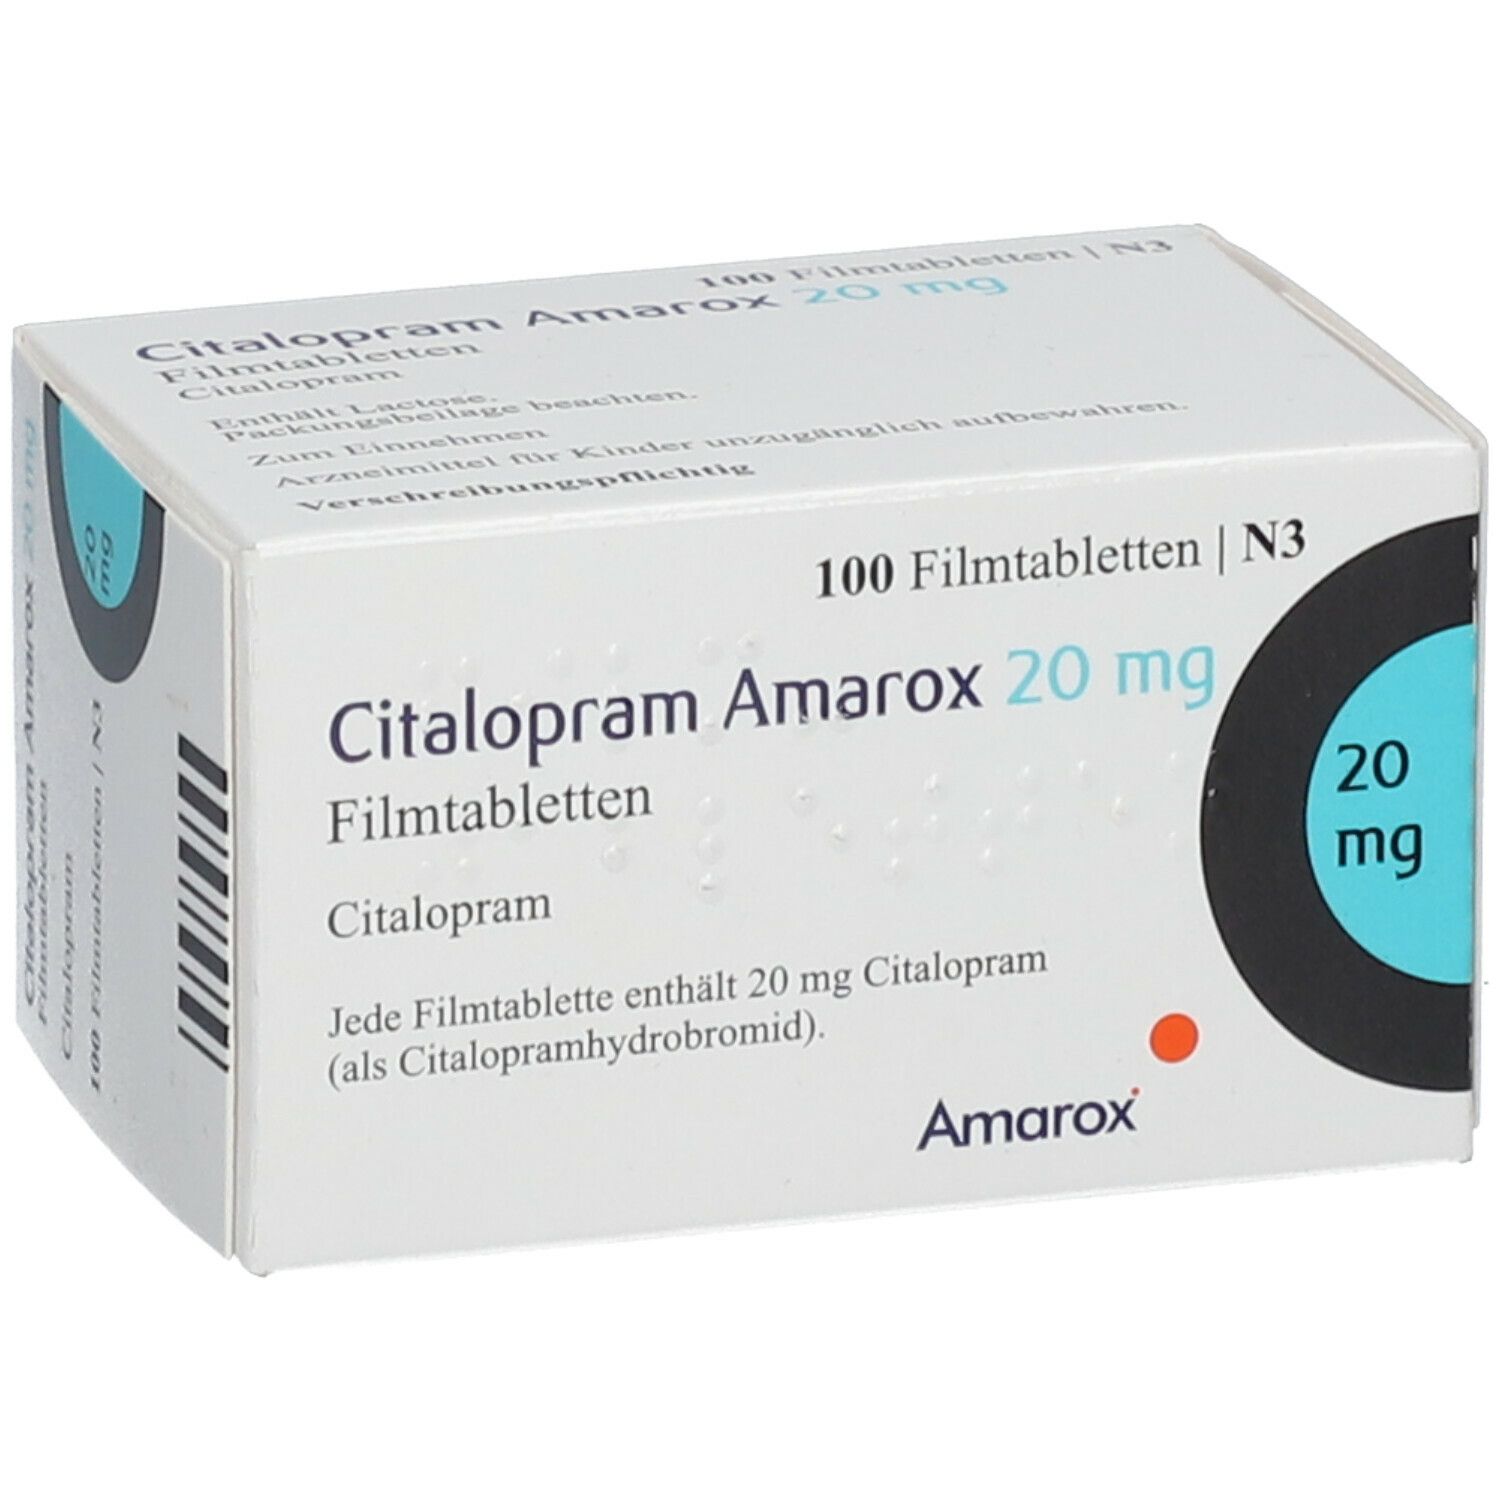 Citalopram Amarox 20 Mg Filmtabletten 100 St Mit Dem E Rezept Kaufen Shop Apotheke 